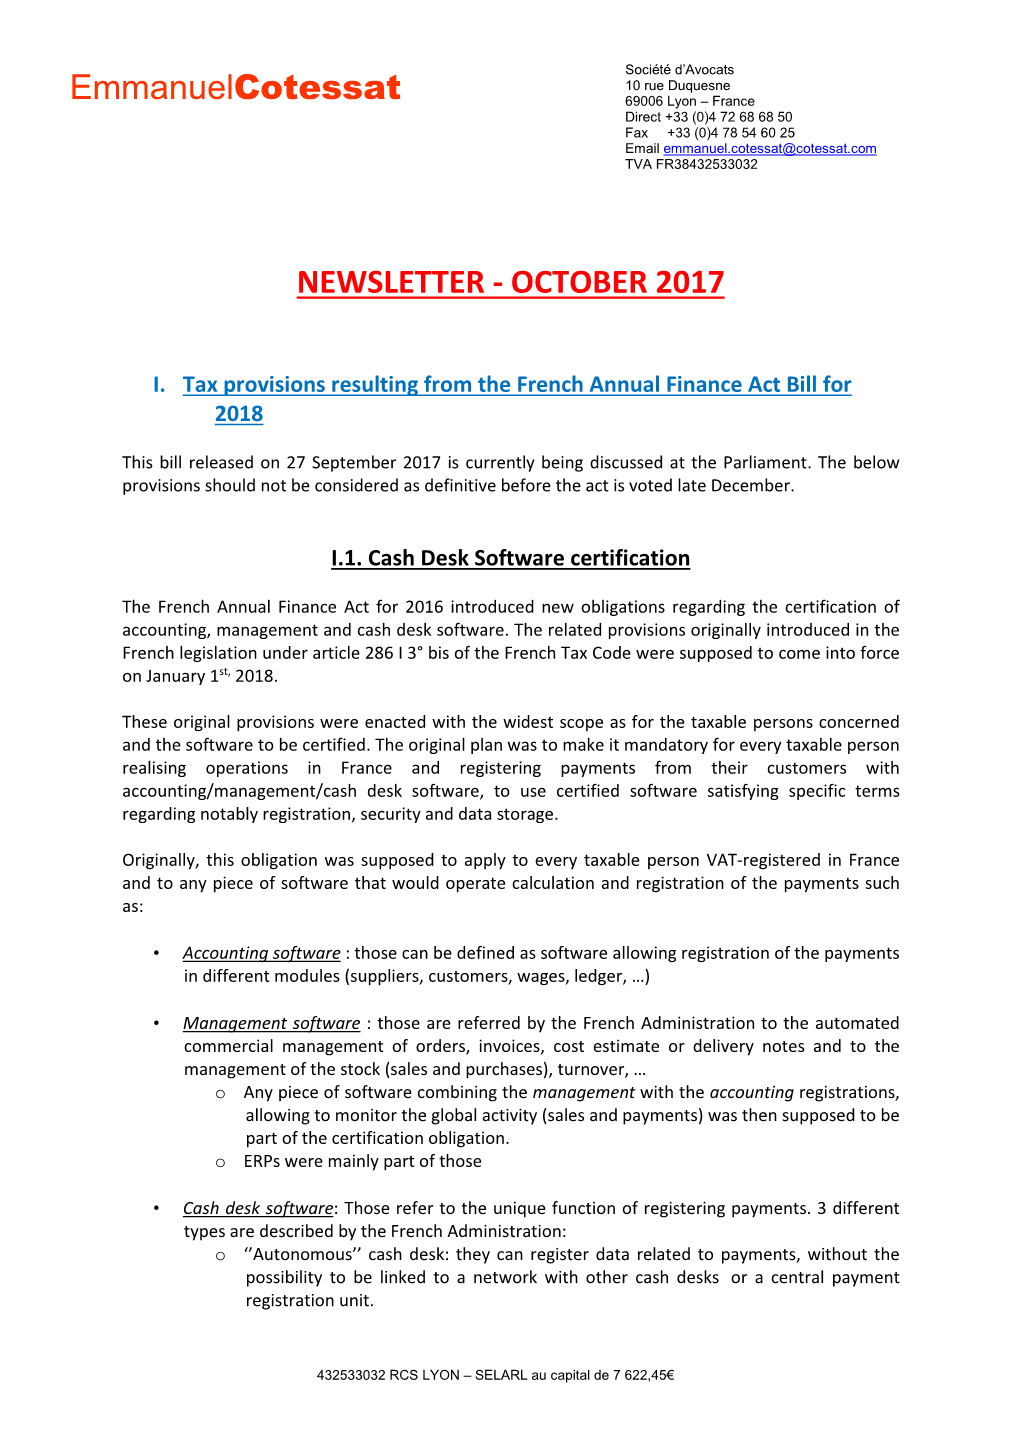 Cotessat Newsletter October 2017